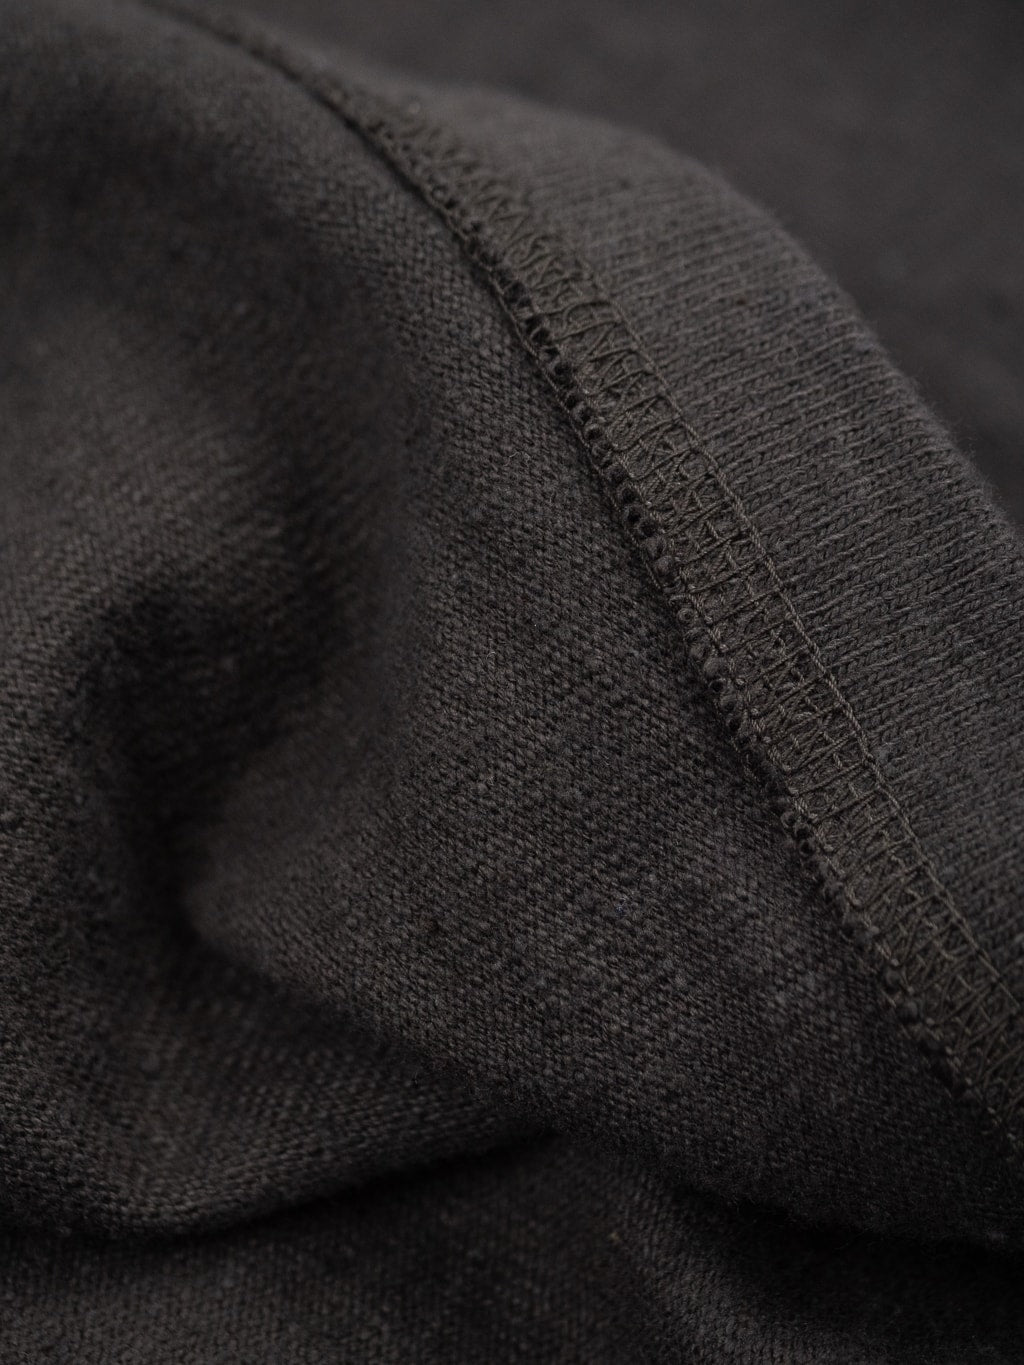 samurai jeans japanese cotton slub crew neck tshirt kuromame texture